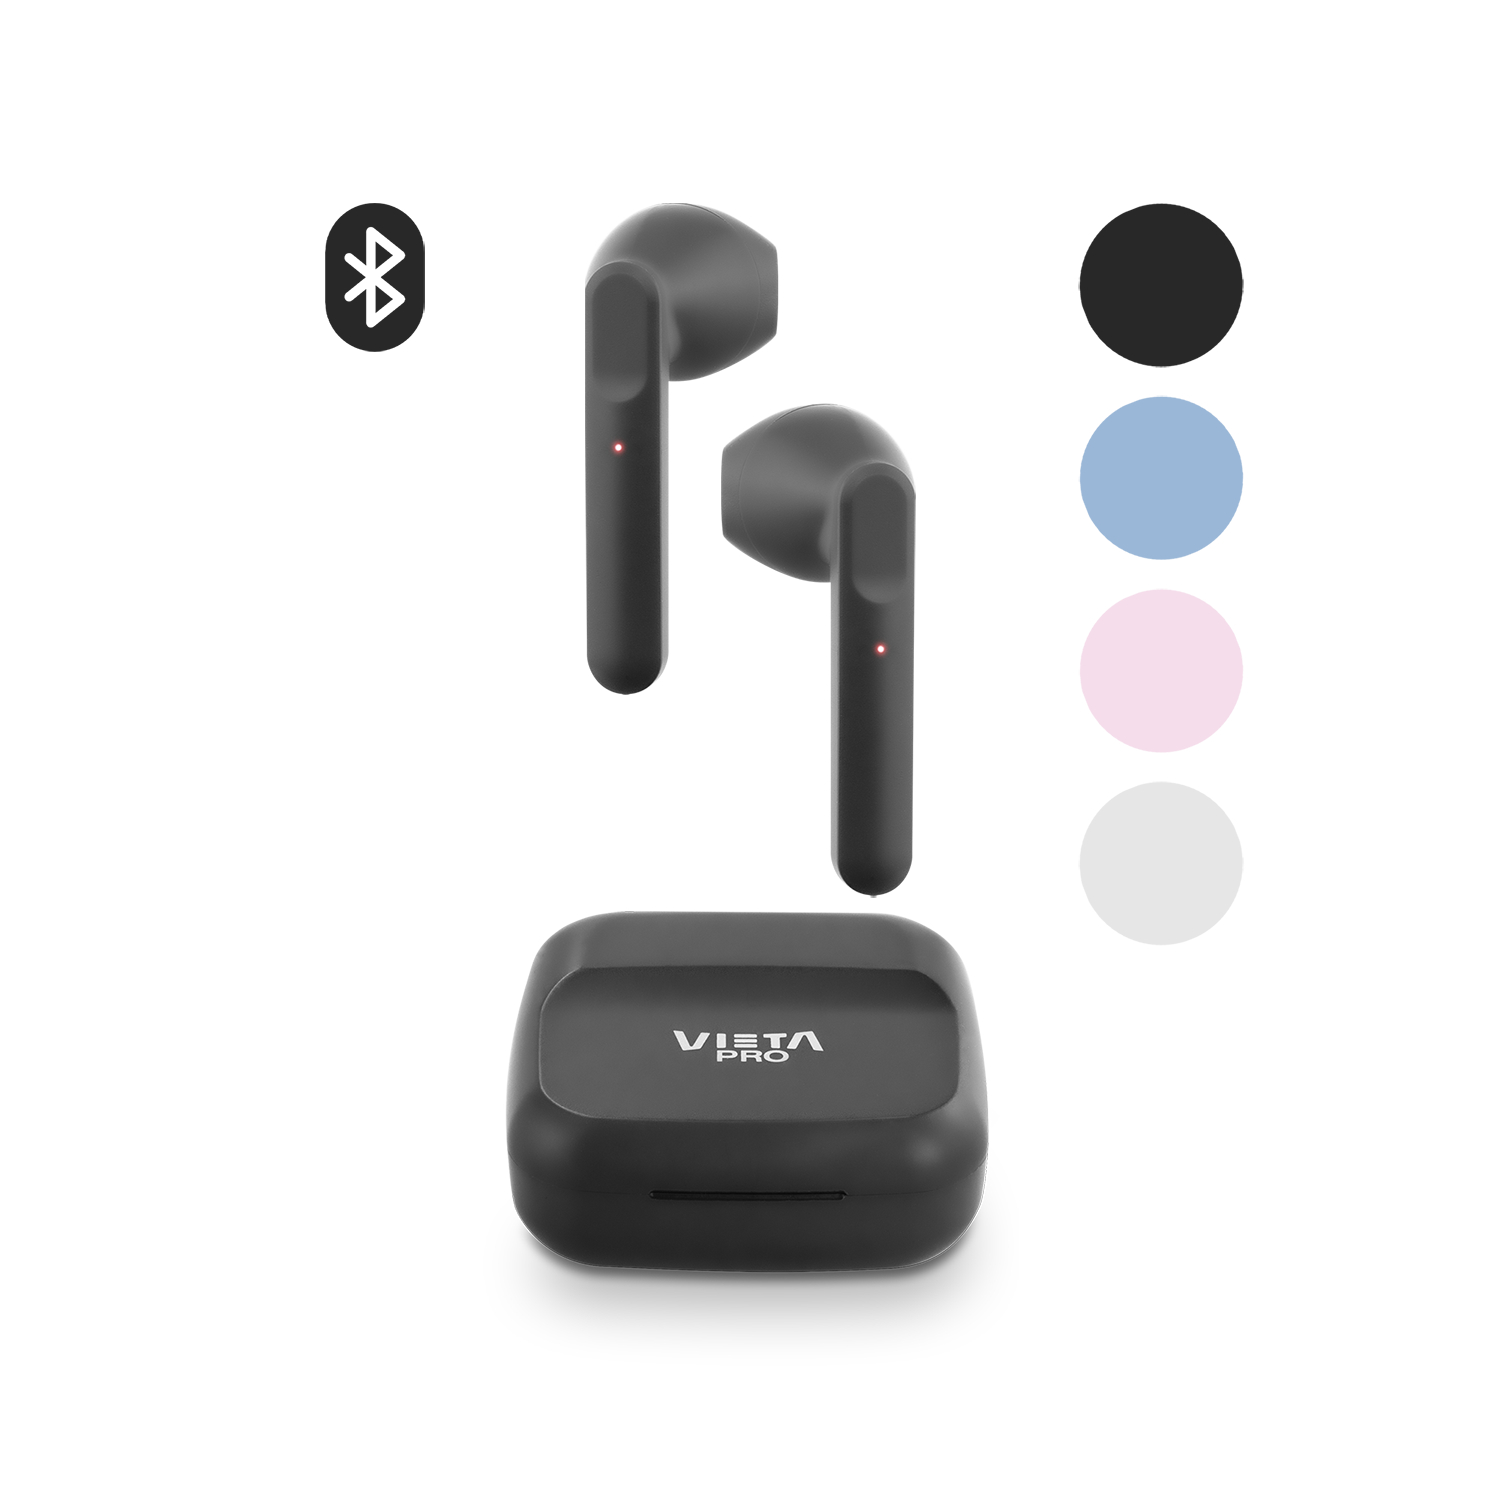 Vieta Pro - Auriculares Track 2 con Bluetooth 5.0, True Wireless